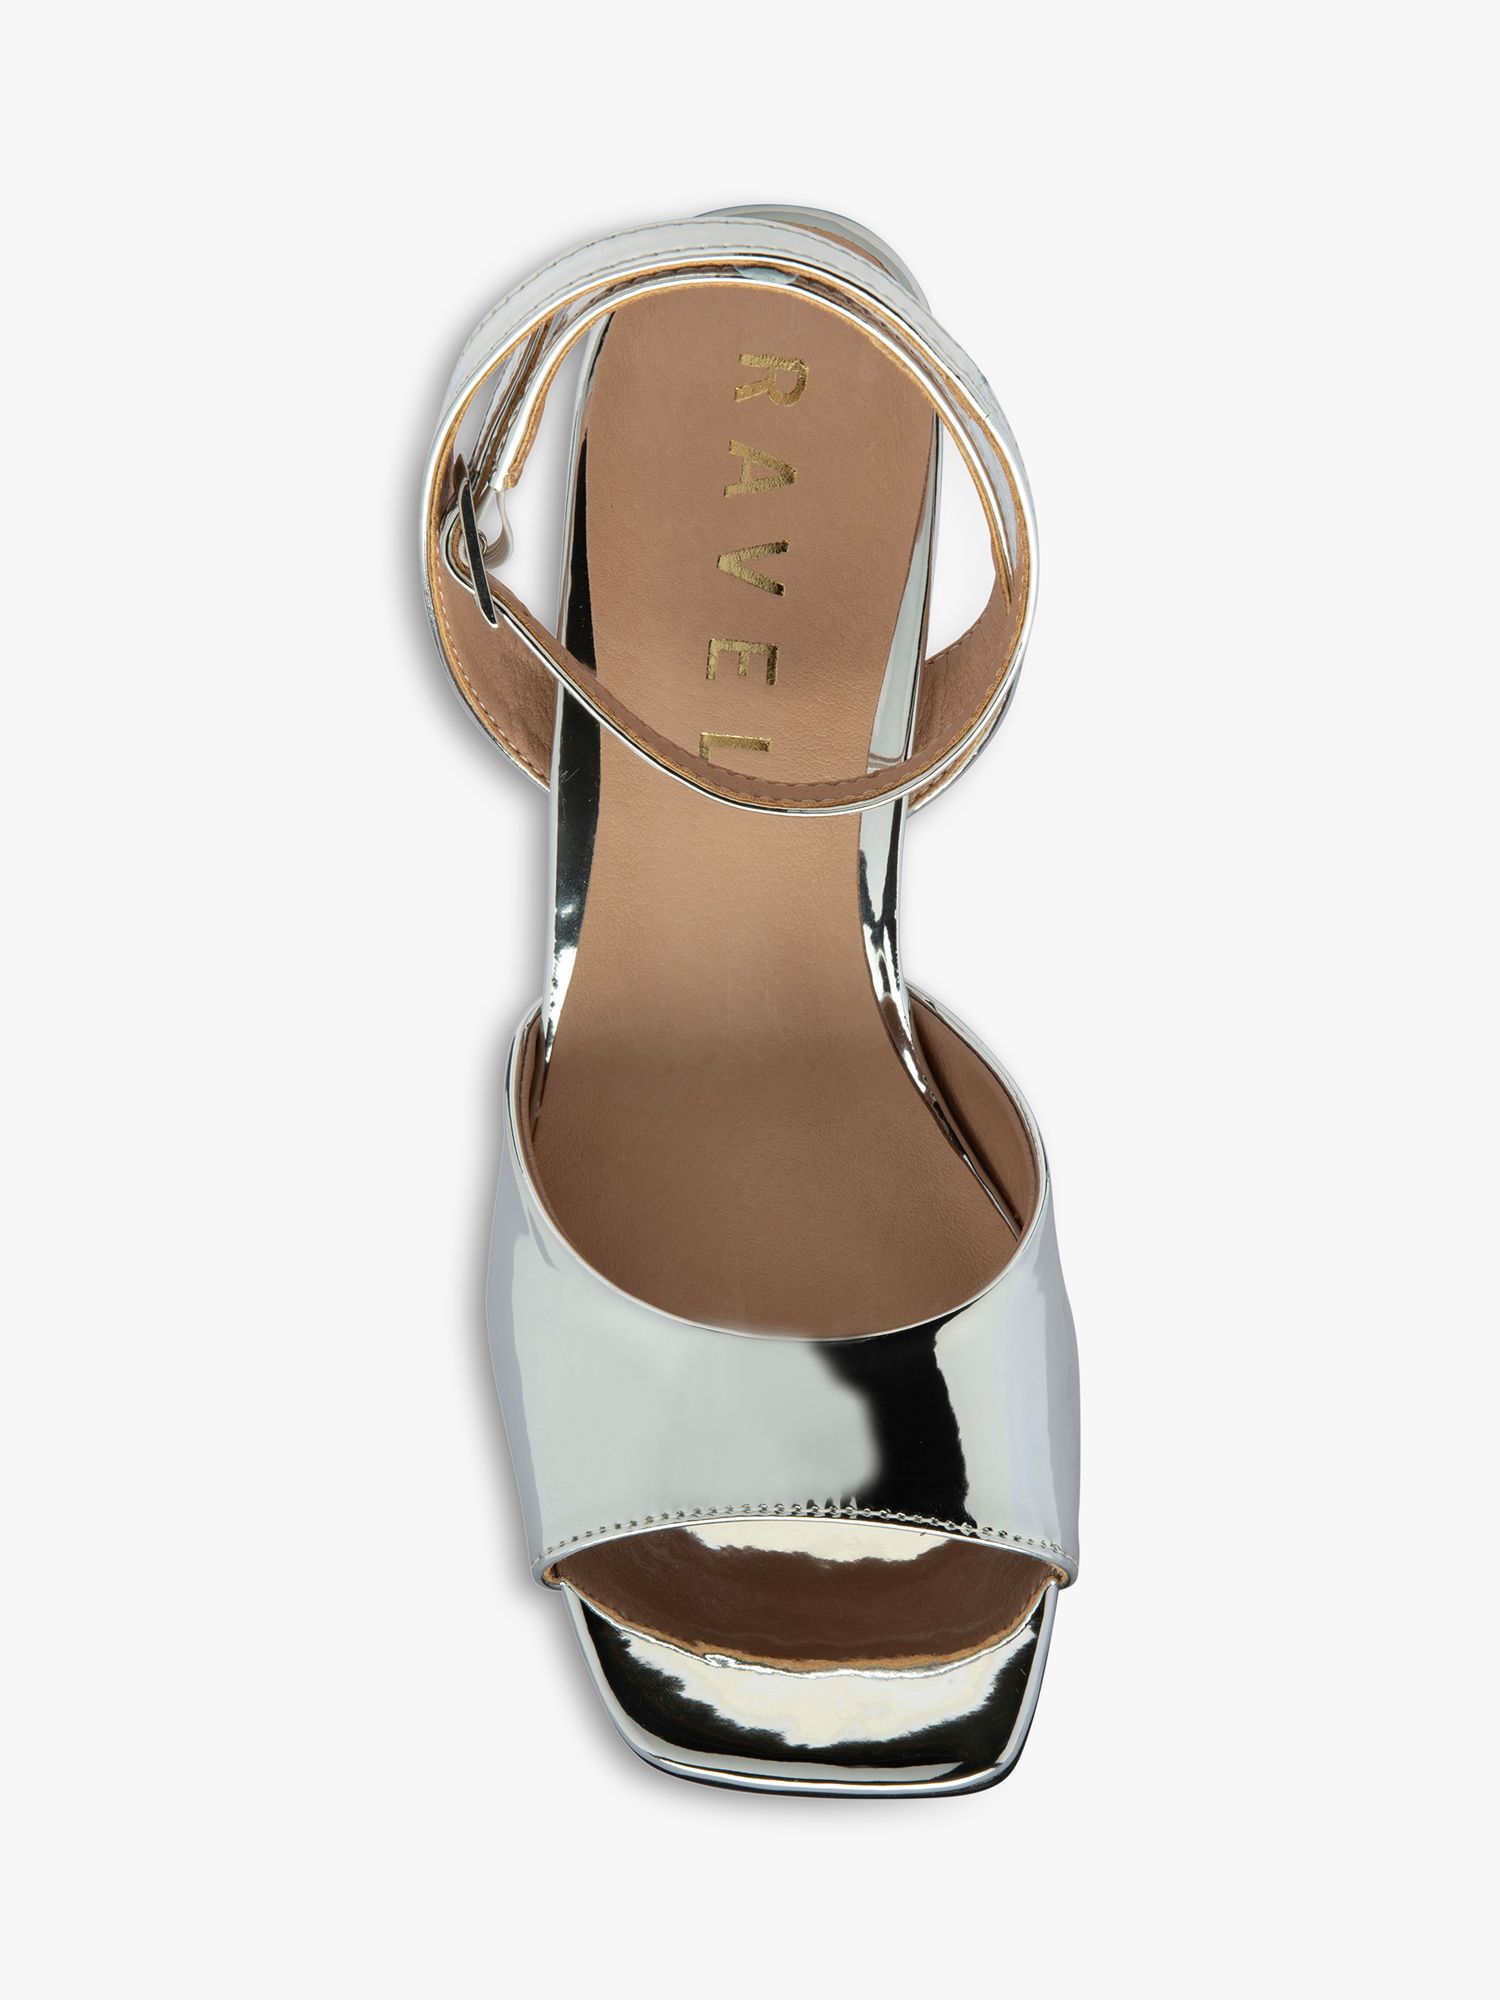 Buy Ravel Pettigo Metallic Stiletto Heel Sandals Online at johnlewis.com